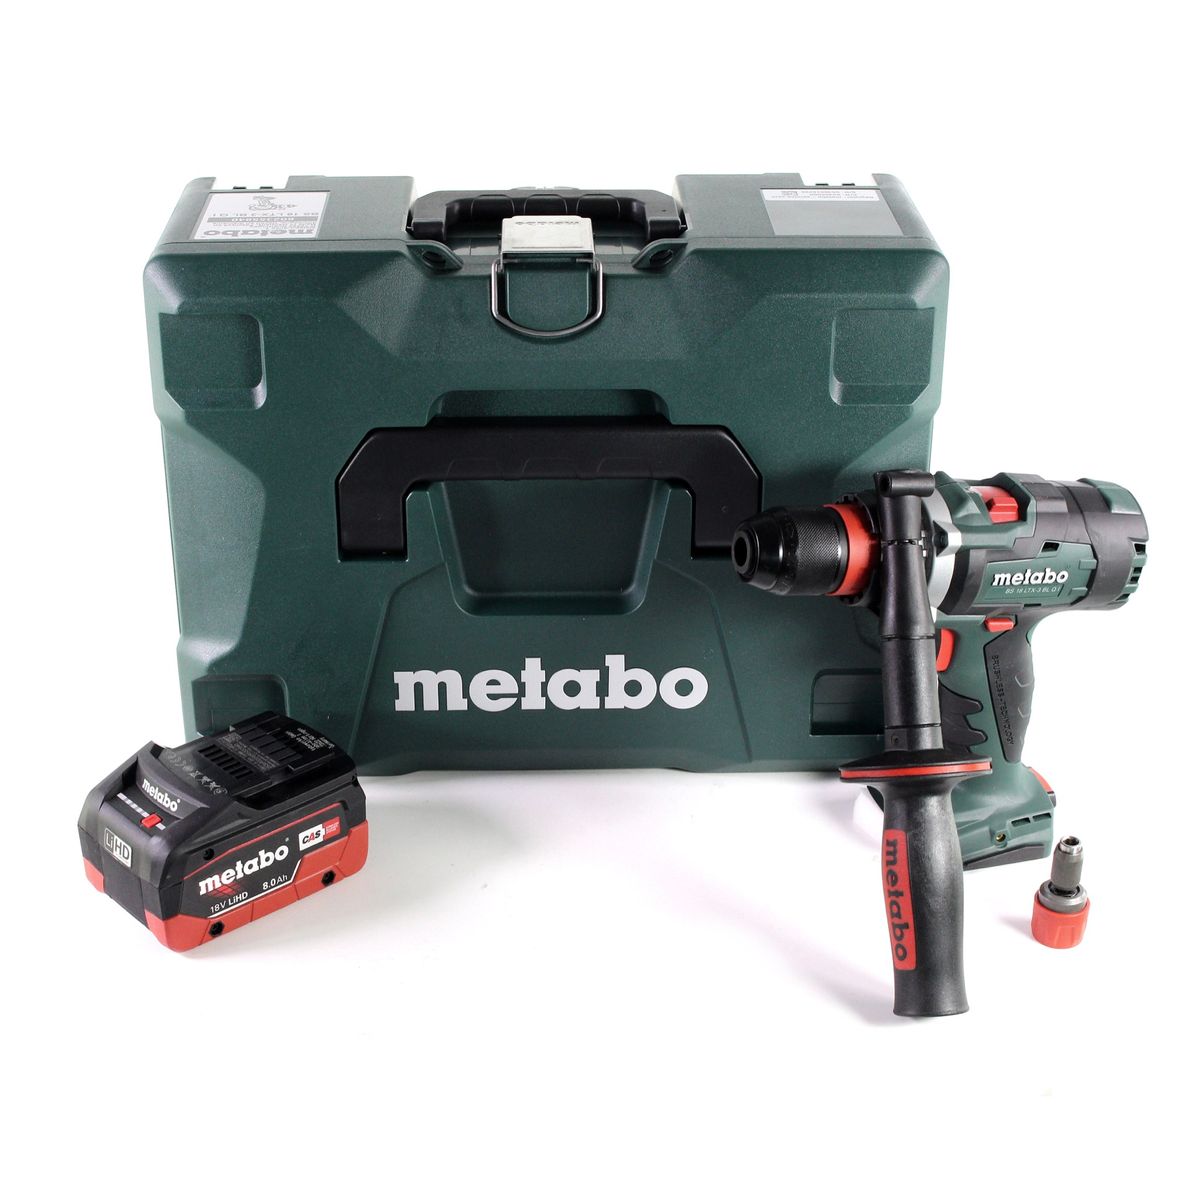 Metabo BS 18 LTX-3 BL V 120 I Nm 18 Q – 1 Brushless Akku Bohrschrauber + Toolbrothers